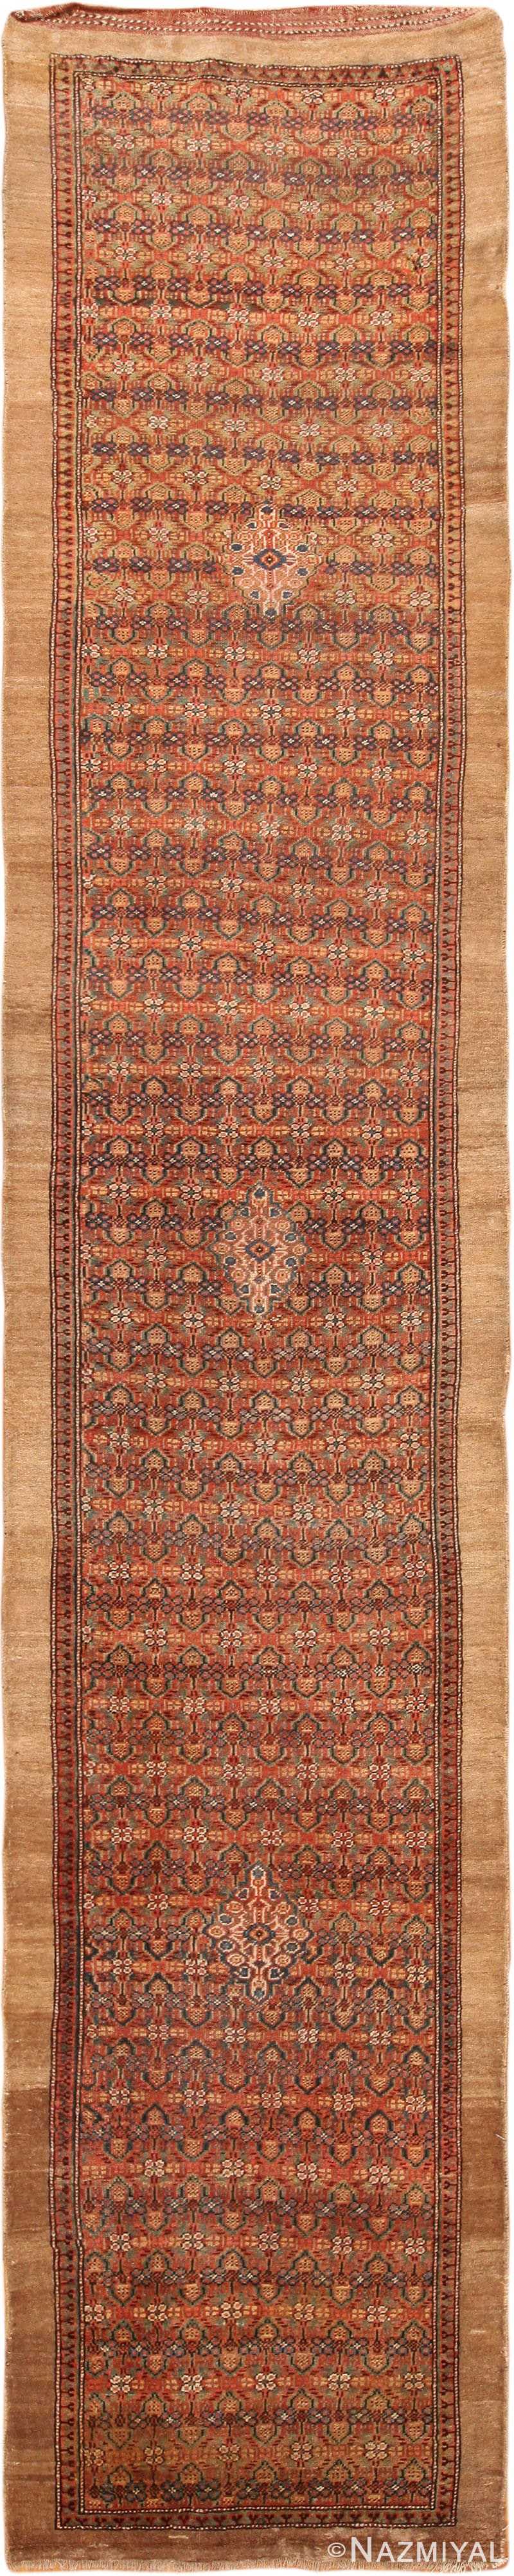 Large Antique Persian Serab Runner 70324 by Nazmiyal NYC